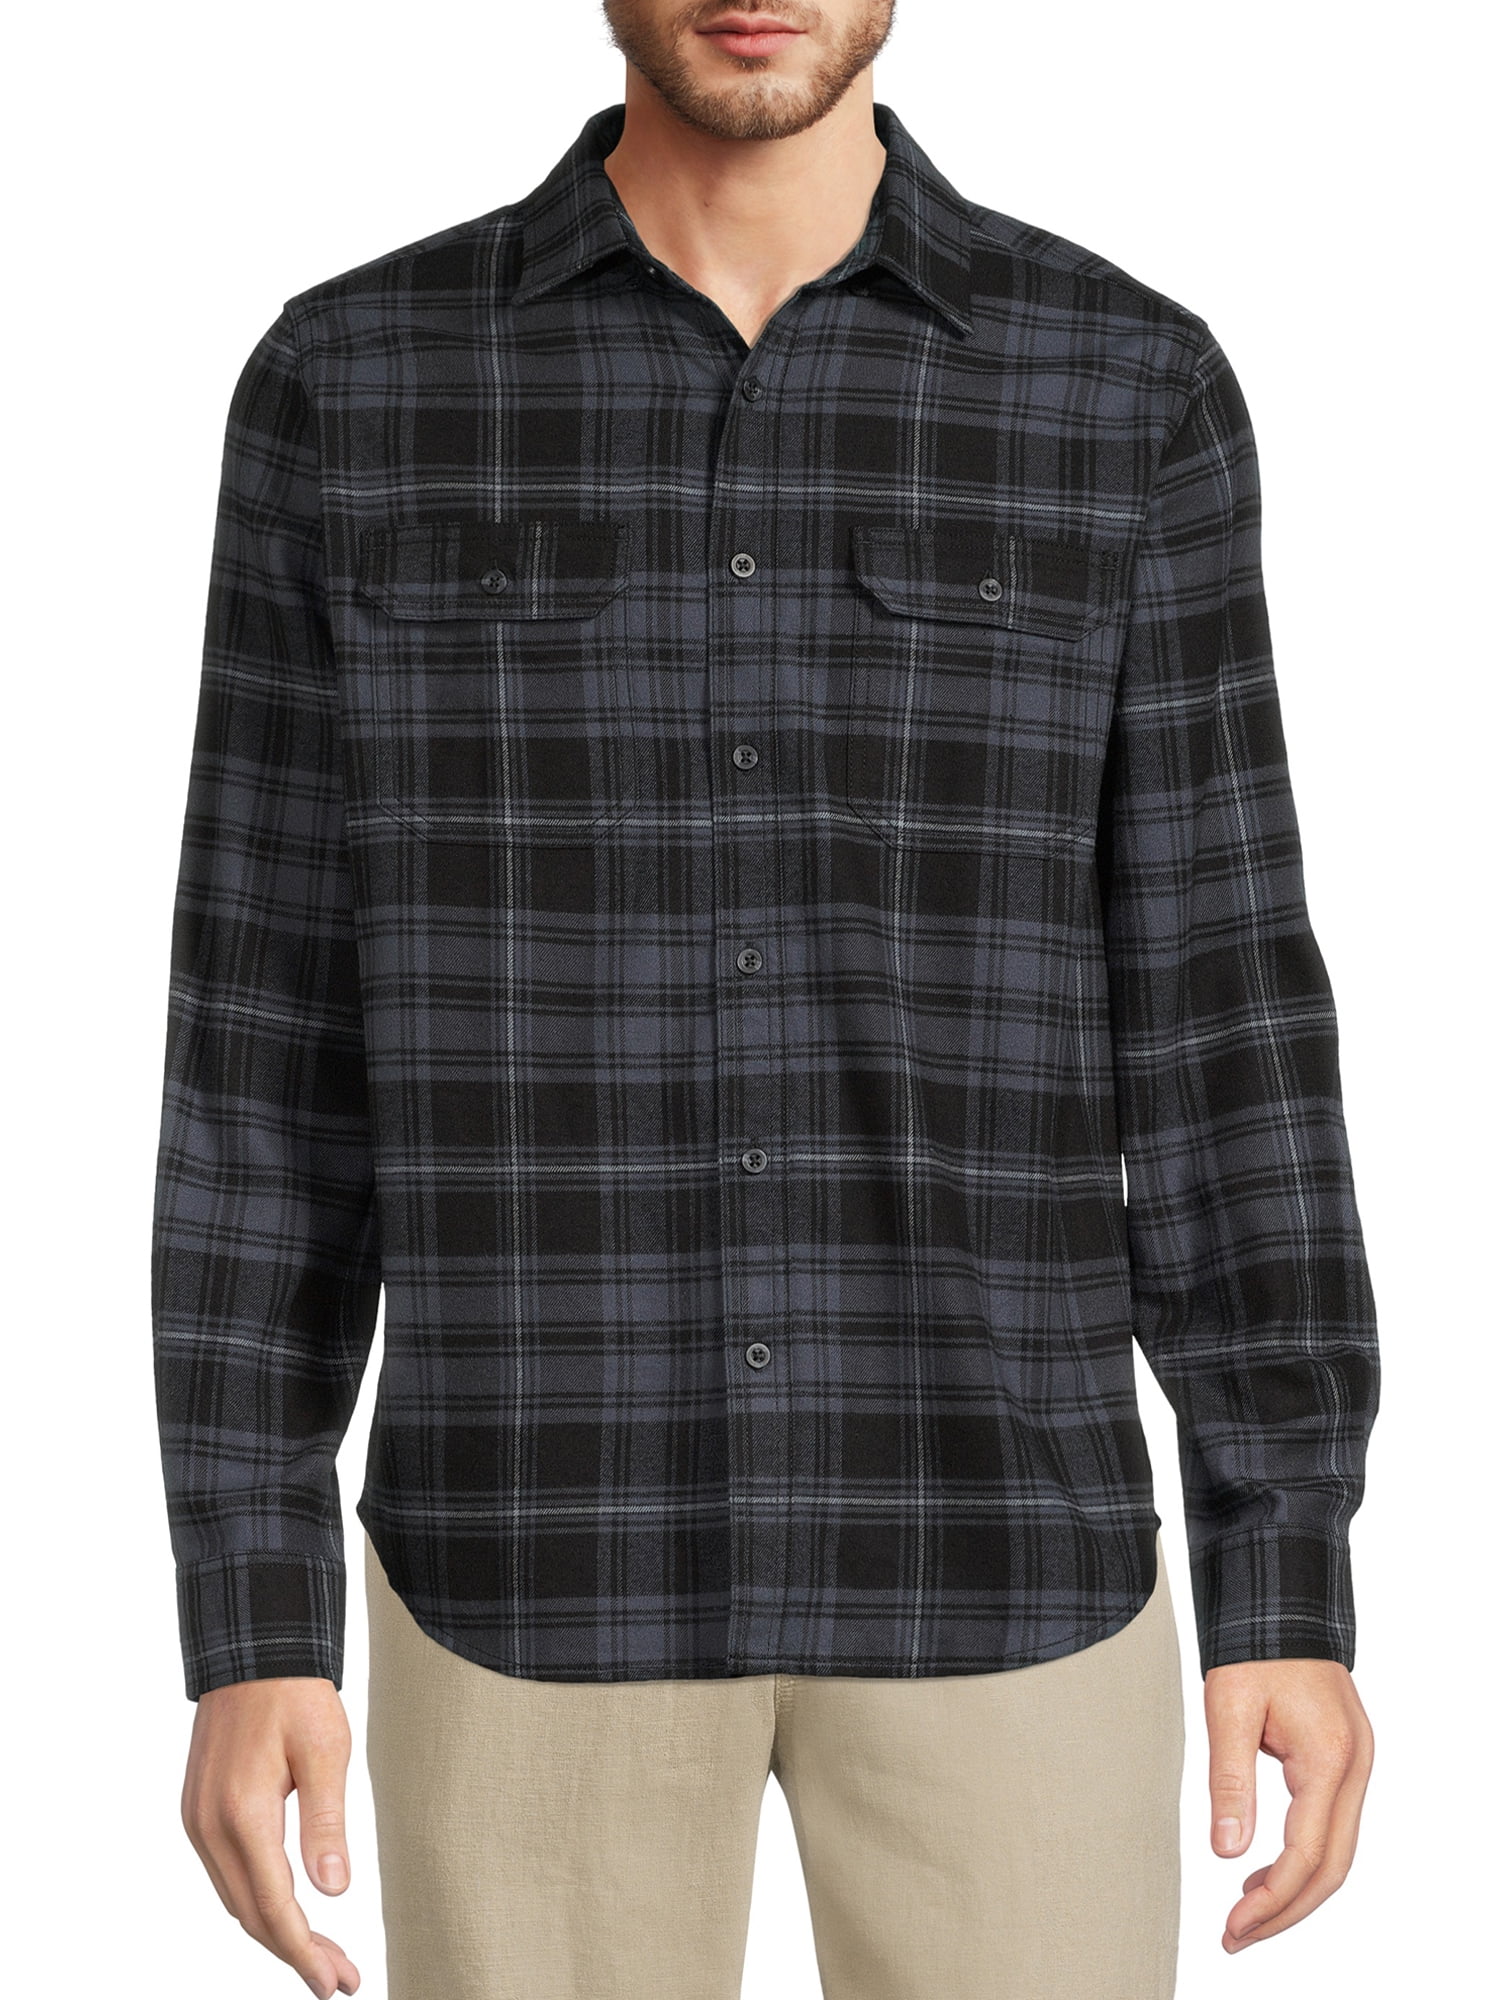 George Men's Long Sleeve Flannel Shirt - Walmart.com